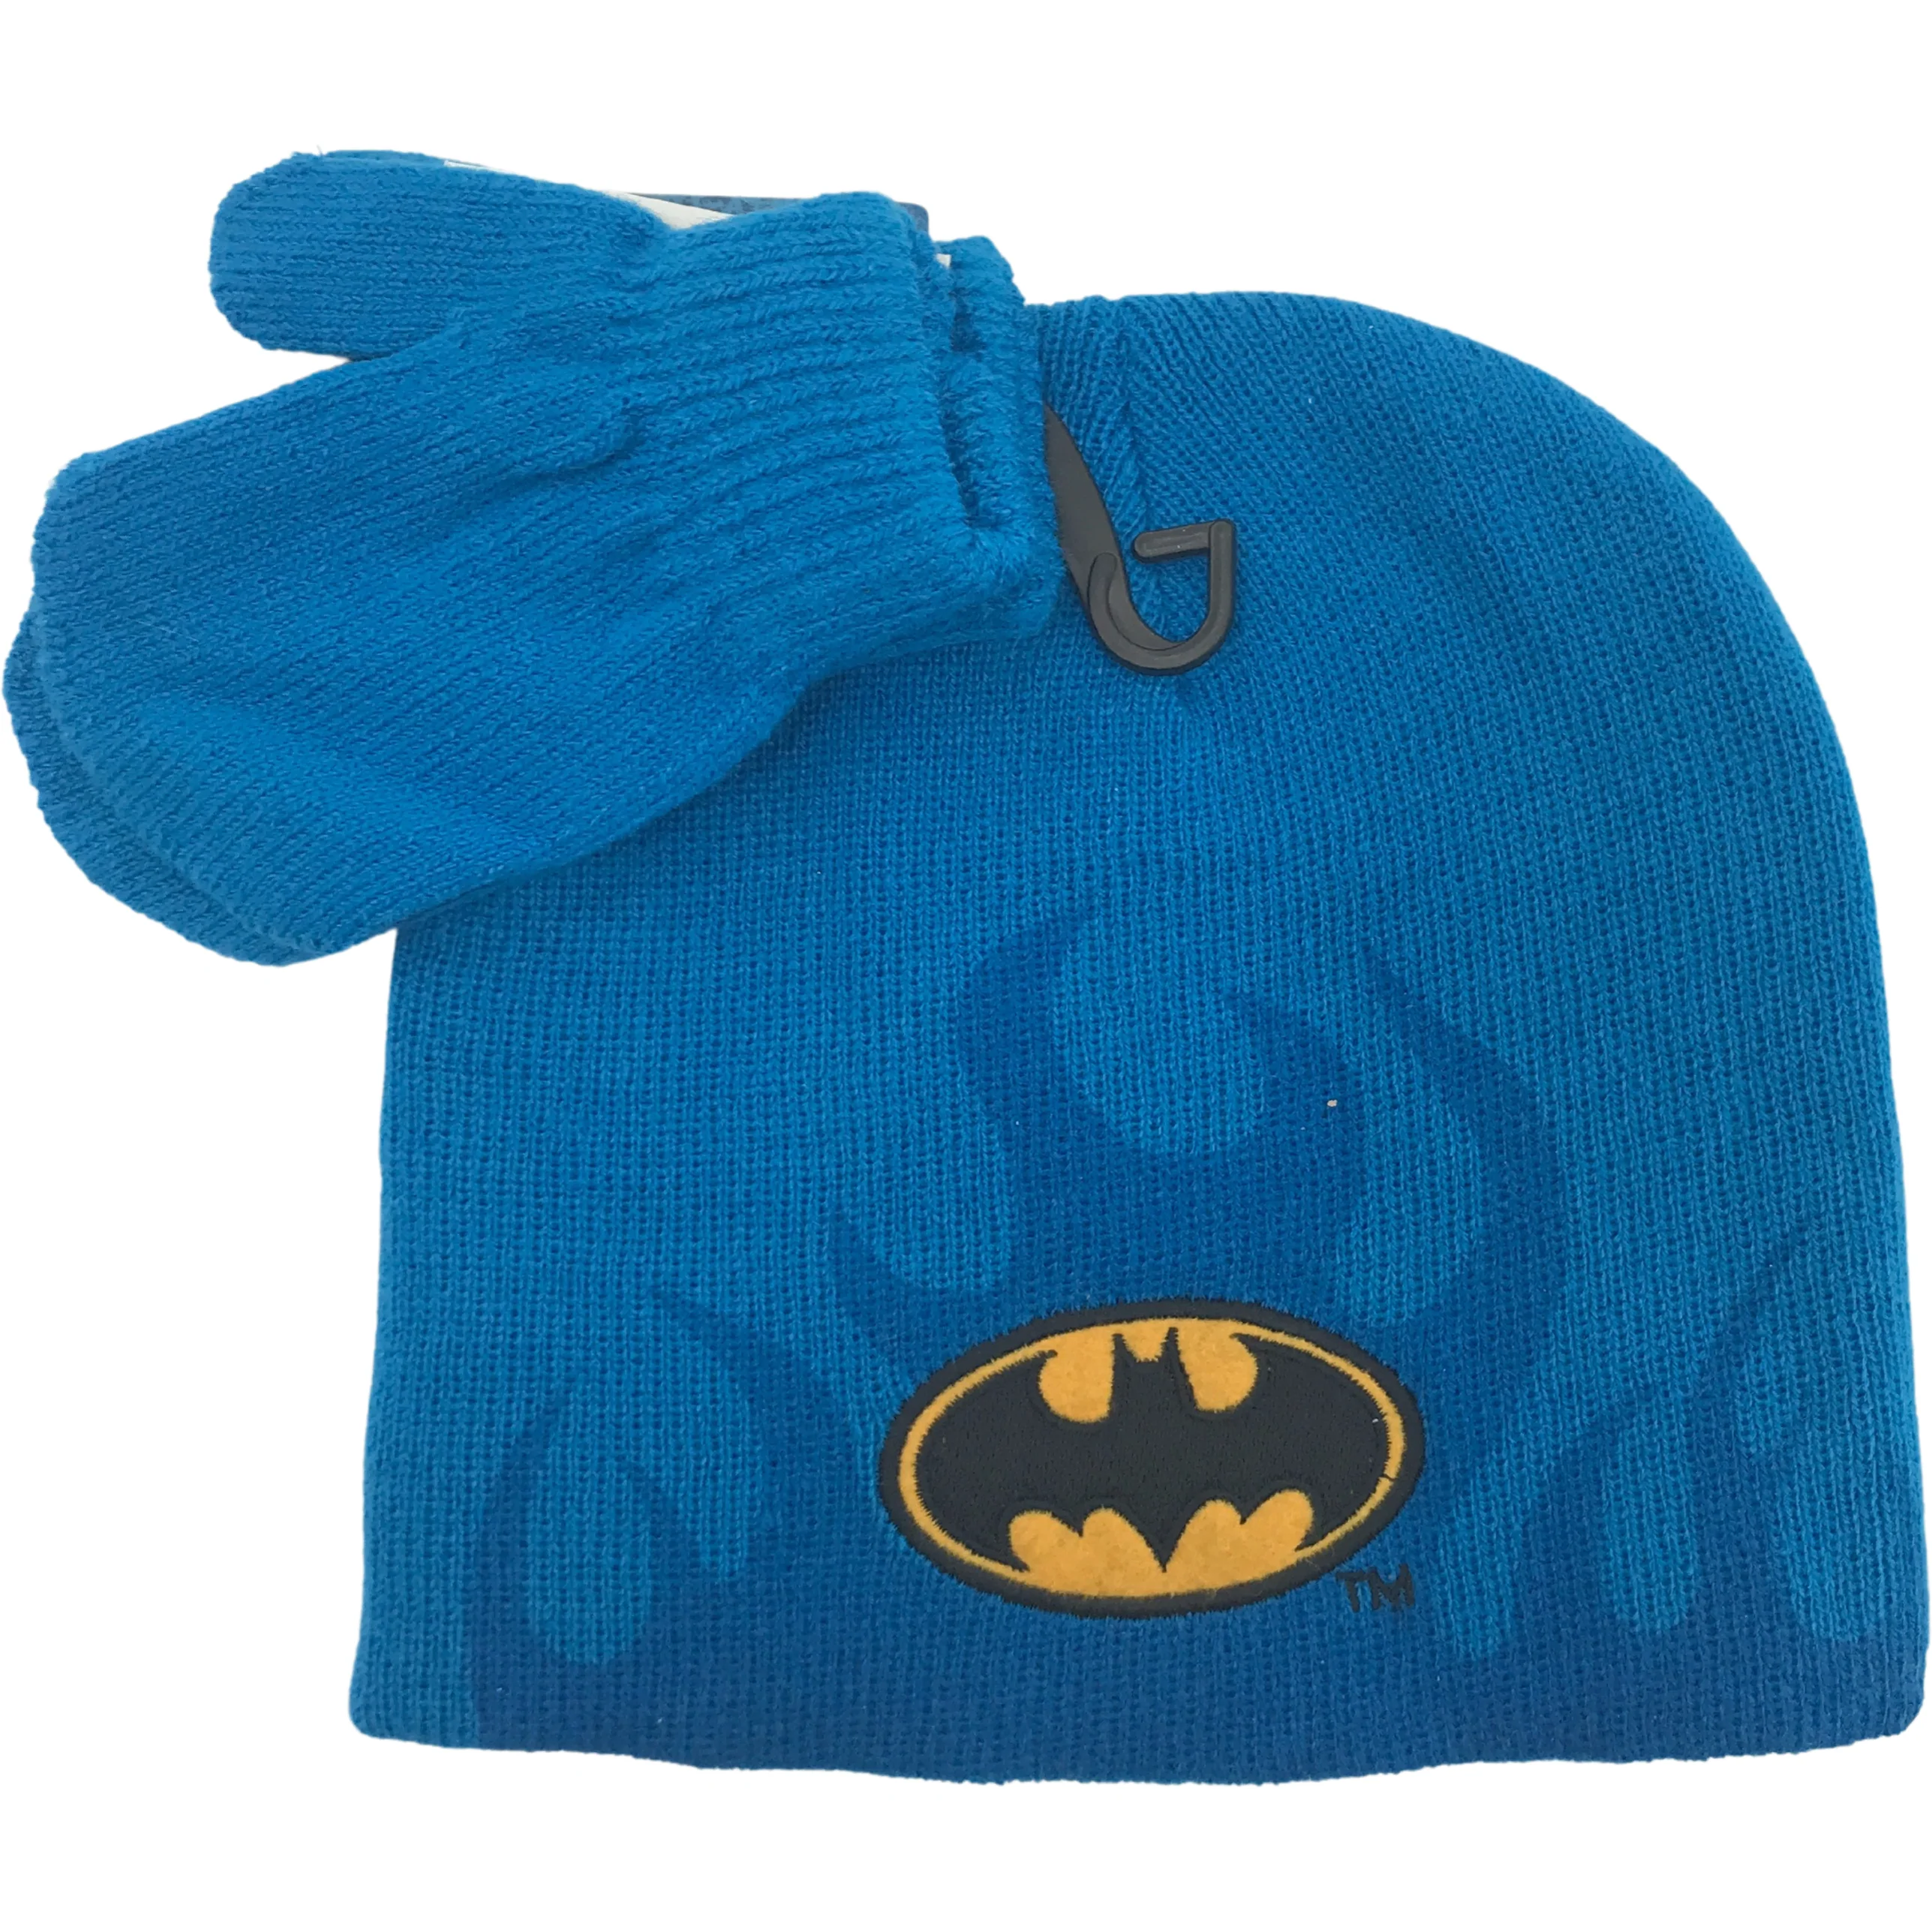 Children's Winter Hat & Mitten Set / DC Comics / Batman / Boy's Toques / One Size